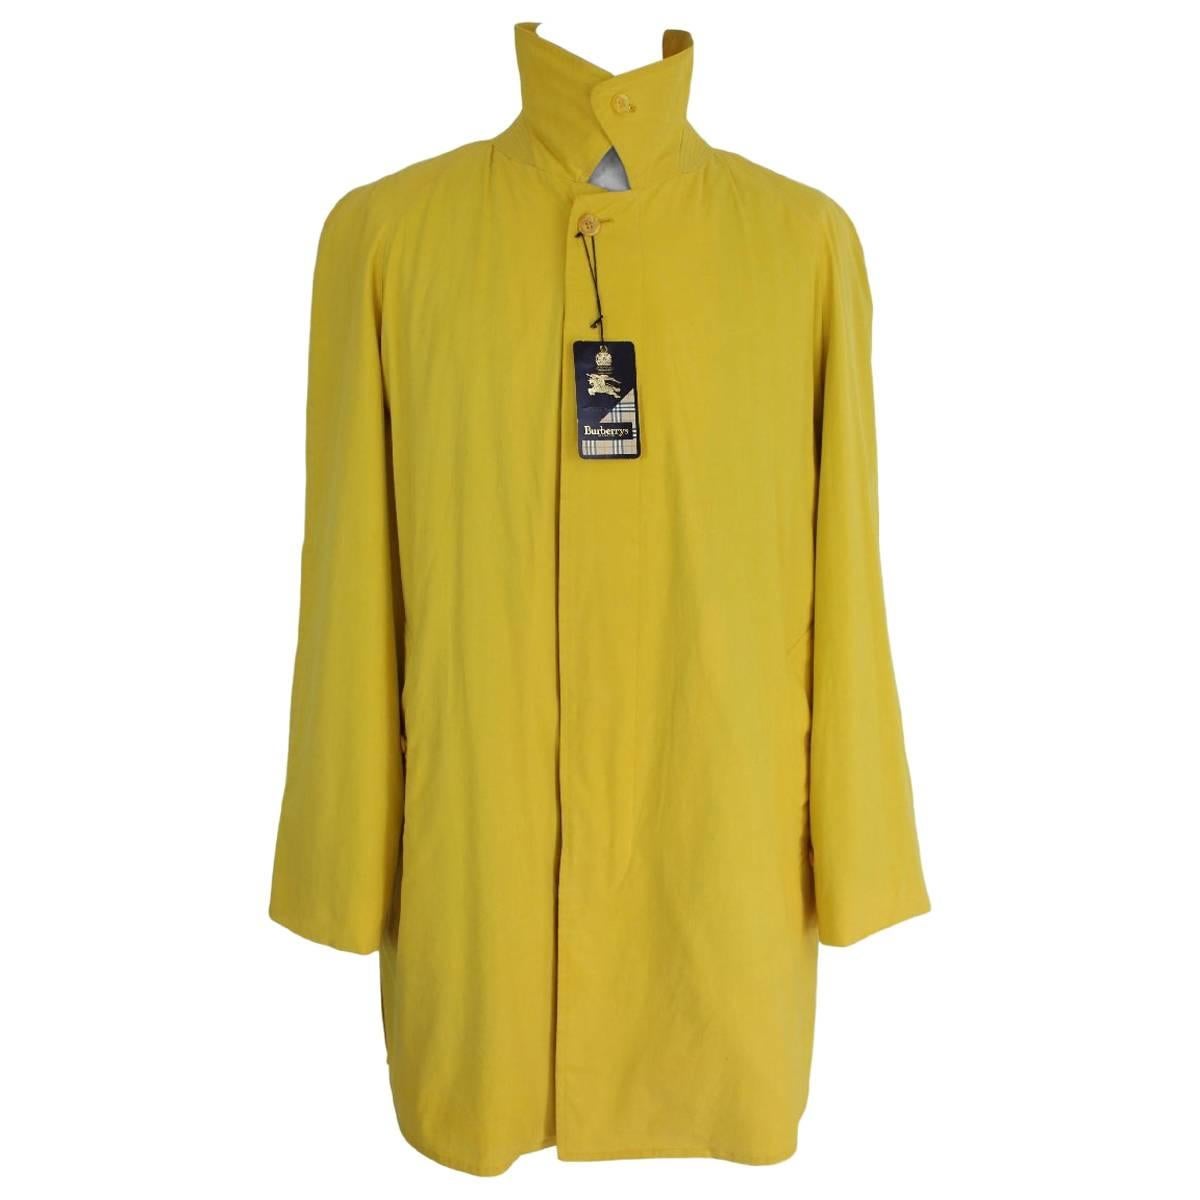 Nwt Burberry vintage yellow cotton wool coat men’s trench Collington size 50 it 